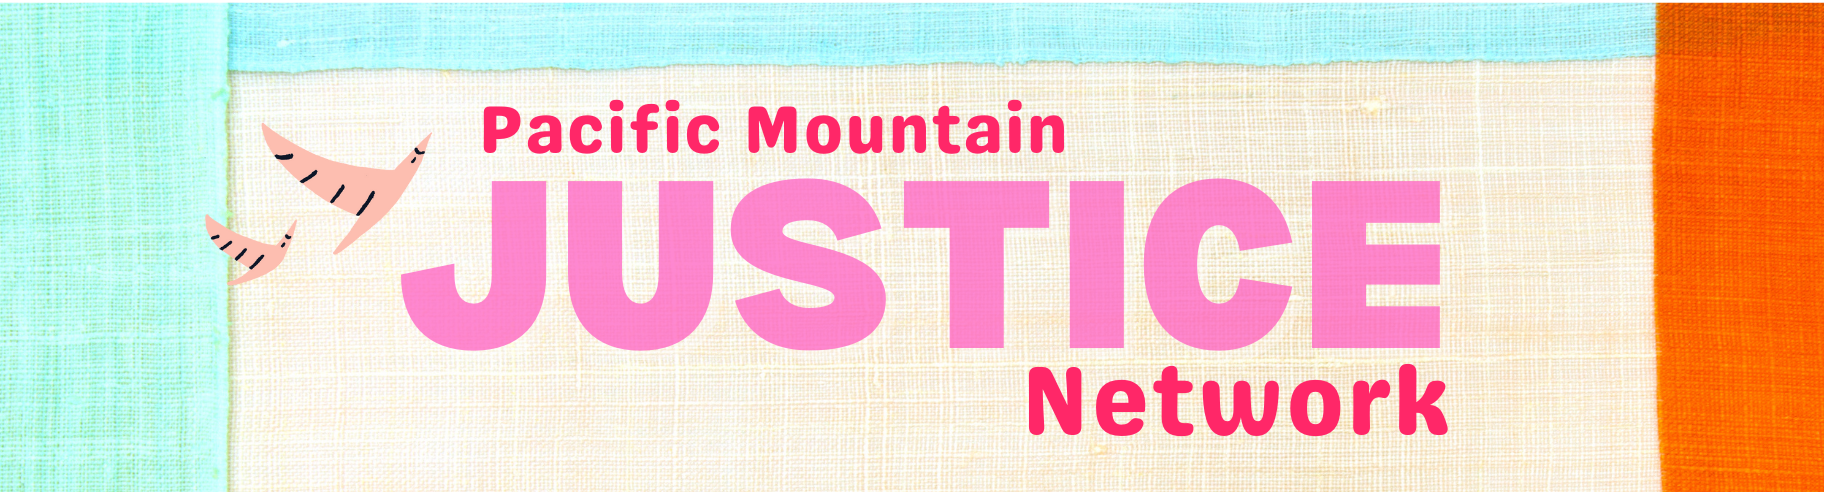 PM Justice Network Banner Header